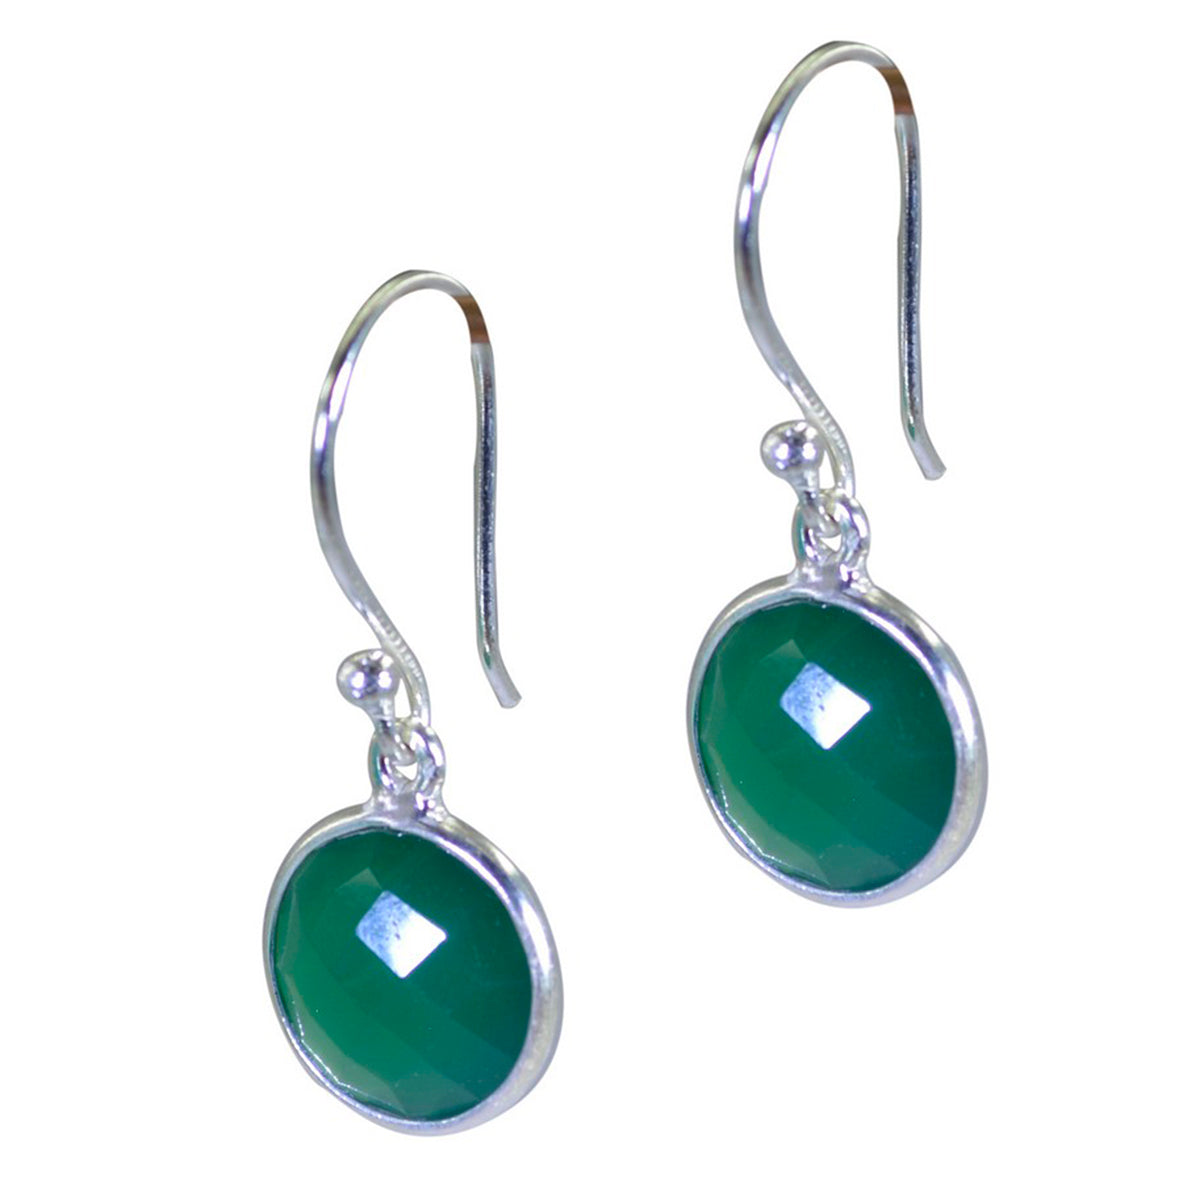 Riyo Genuine Gems round Checker Green Onyx Silver Earrings gift for halloween